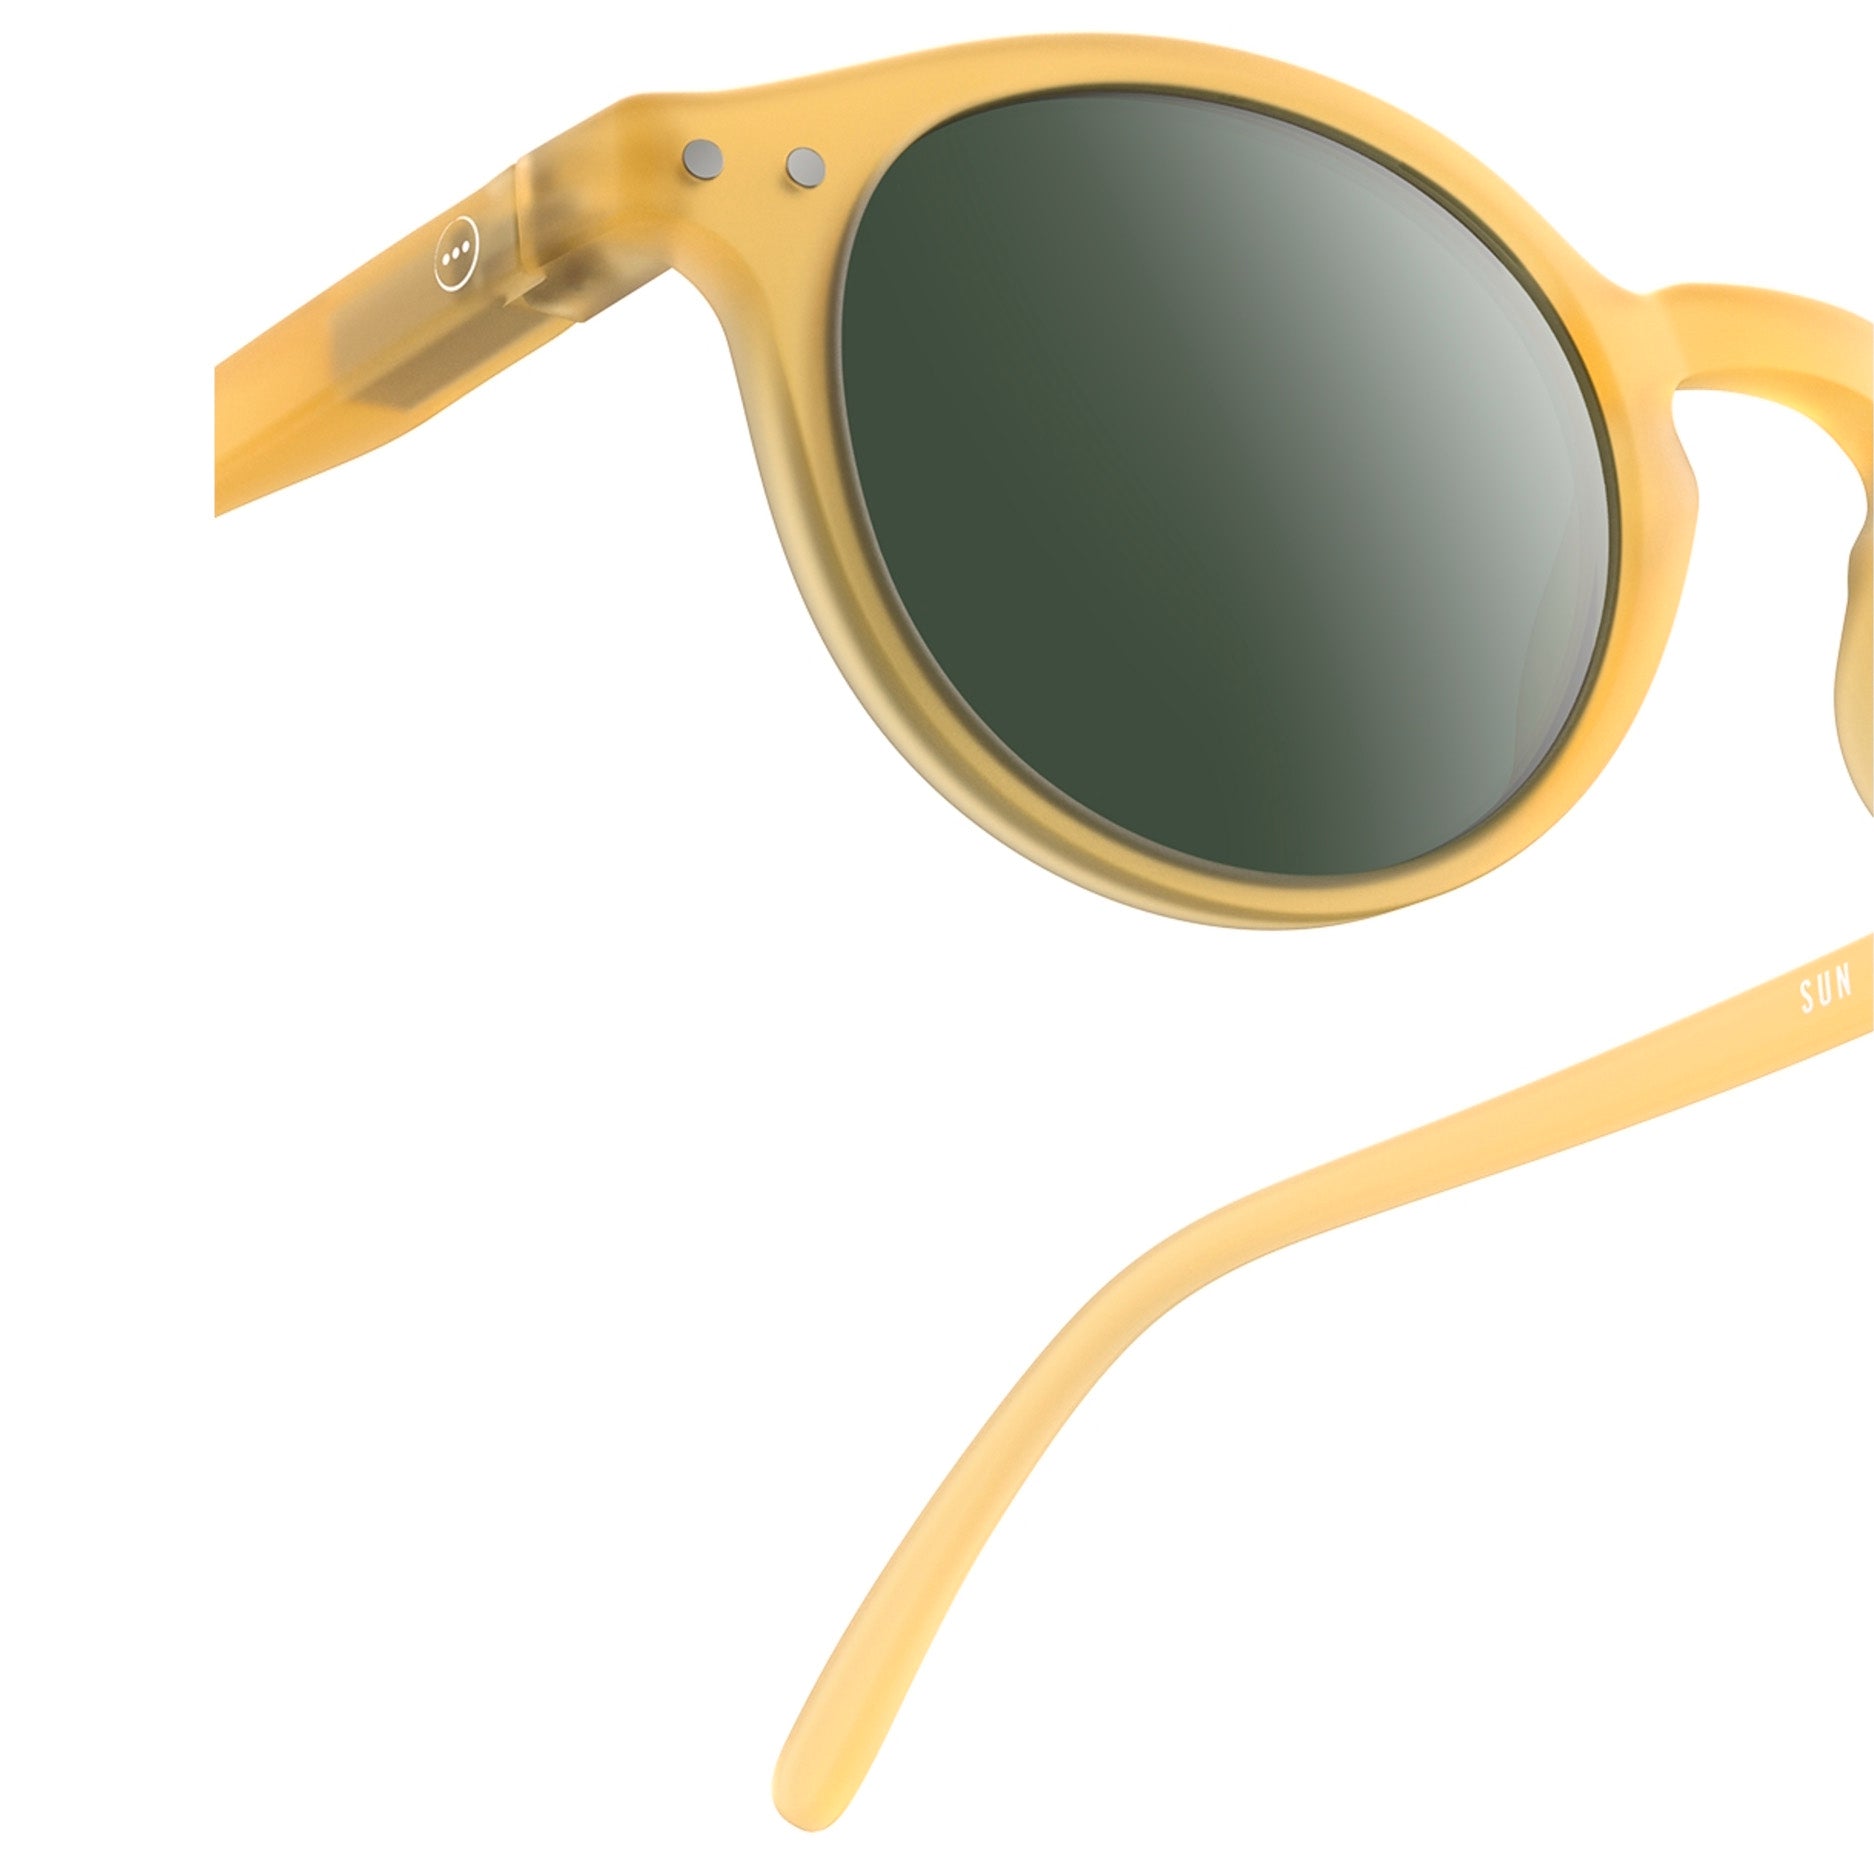 Adult Yellow "SUN #H" Sunglasses